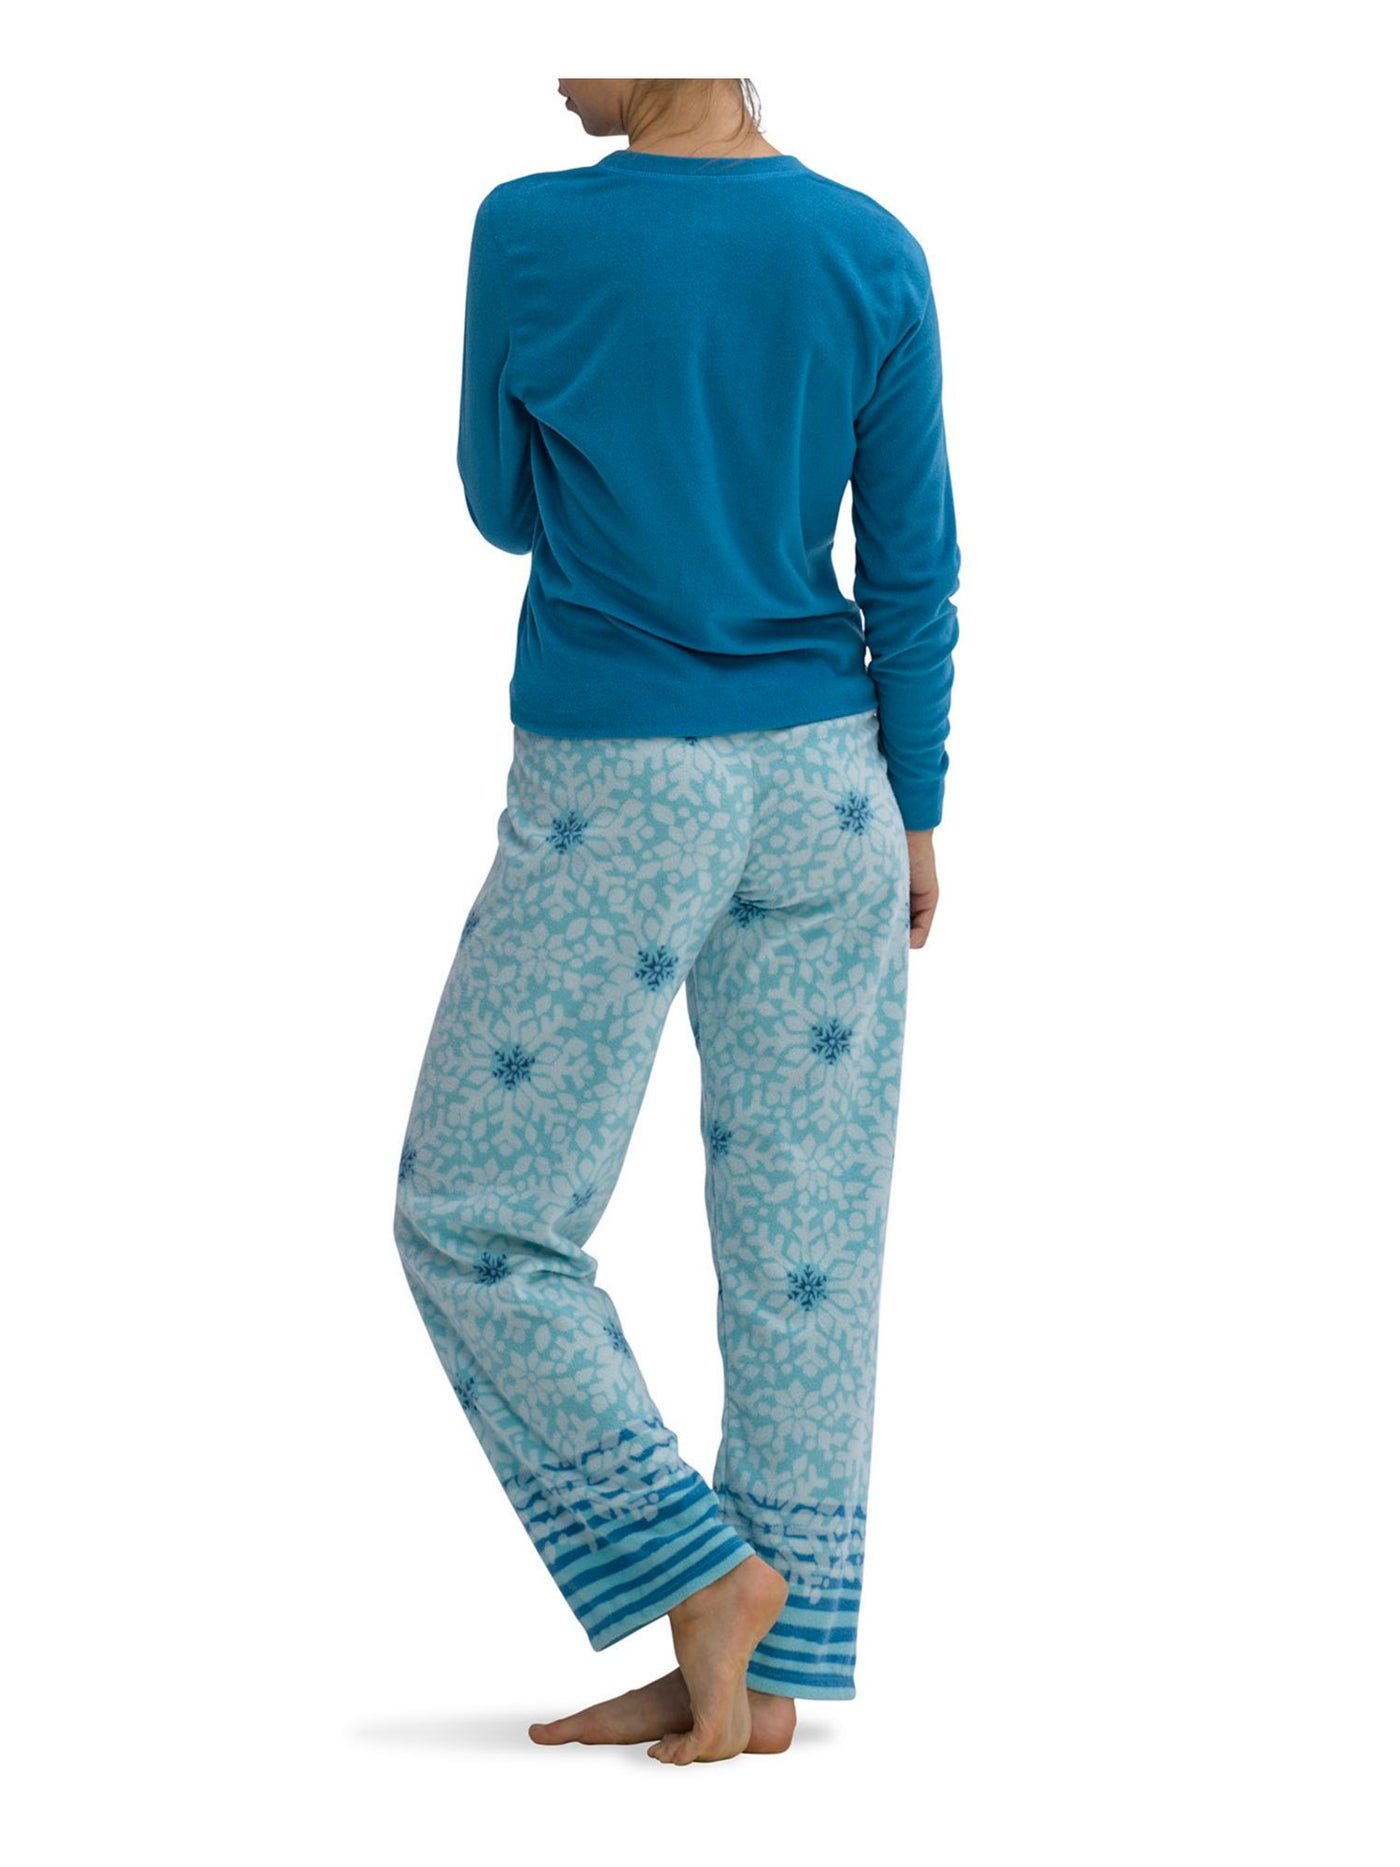 HUE Intimates Blue Crew Neck Sleep Shirt Pajama Top XL